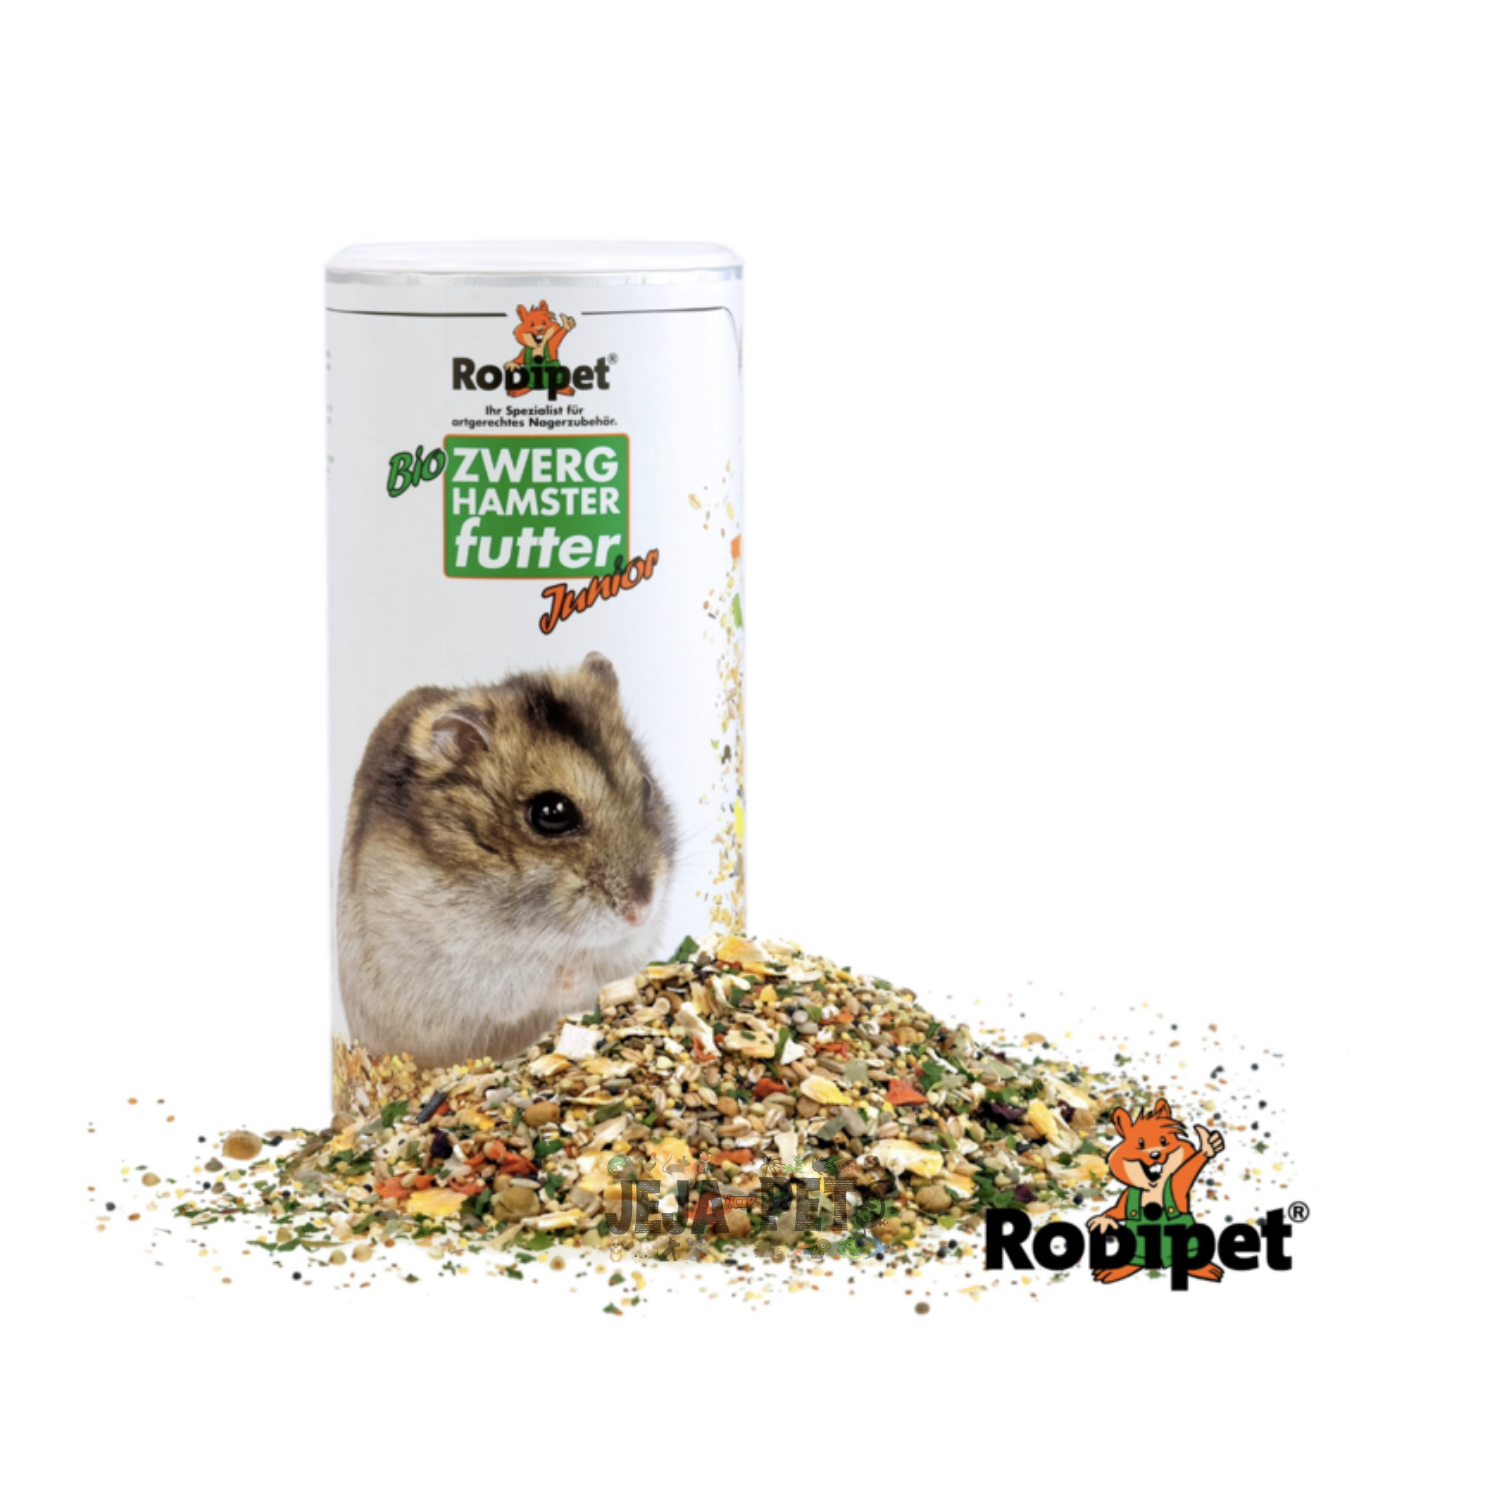 Rodipet Organic Dwarf Hamster Food “JUNiOR” - 500g